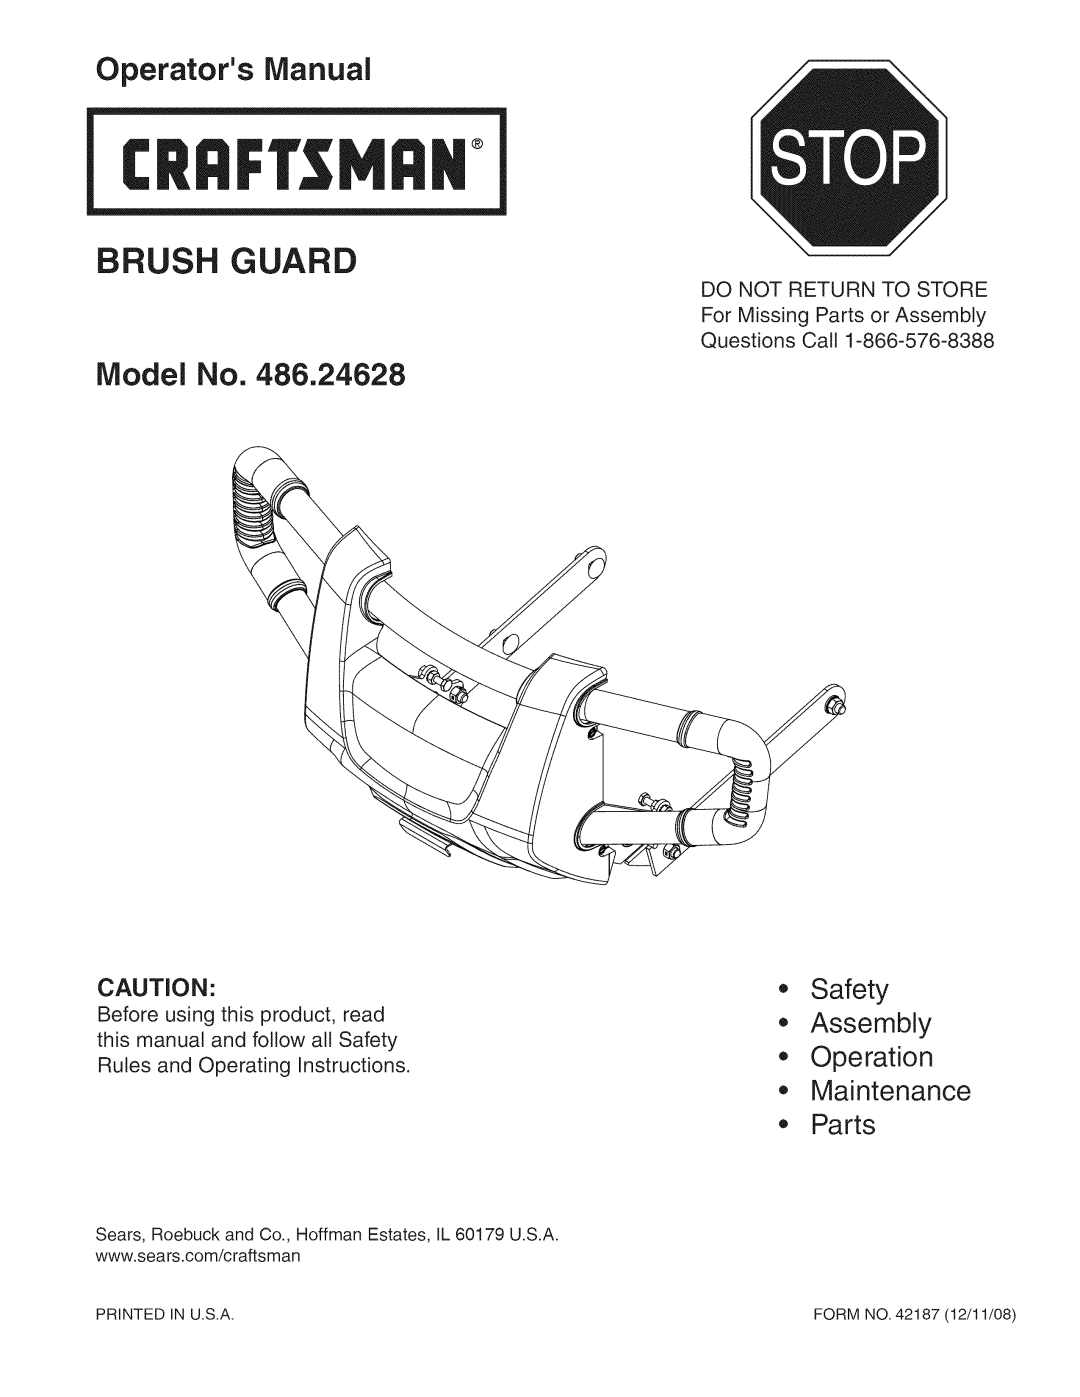 Craftsman 486.24628 manual Model No, Safety Assembly Operation Maintenance Parts, Brush Guard, Operators IVlanuai 